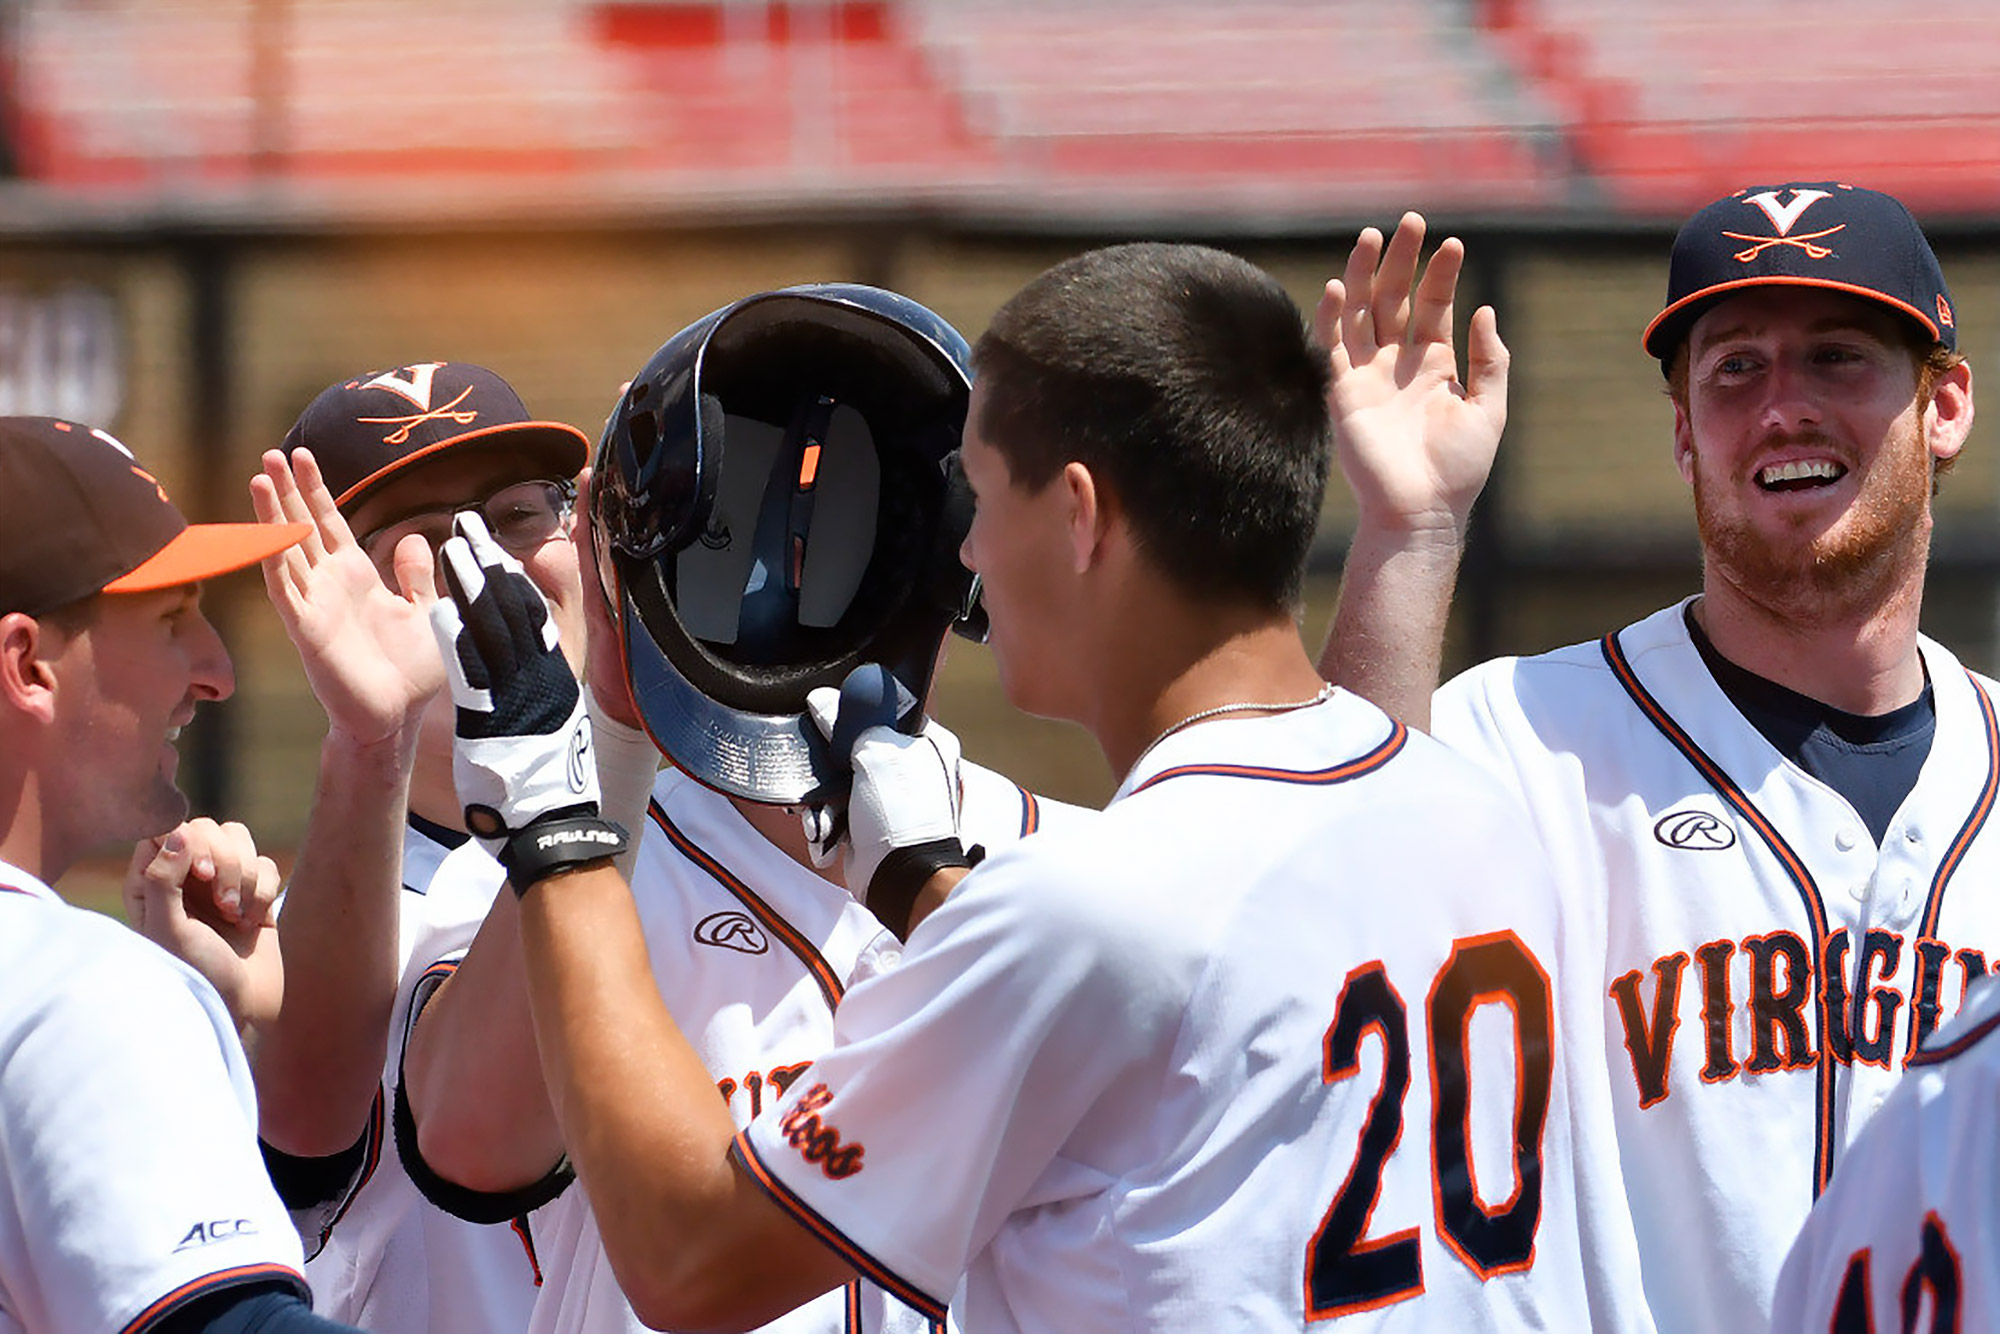 UVA baseball team giving each other high fives